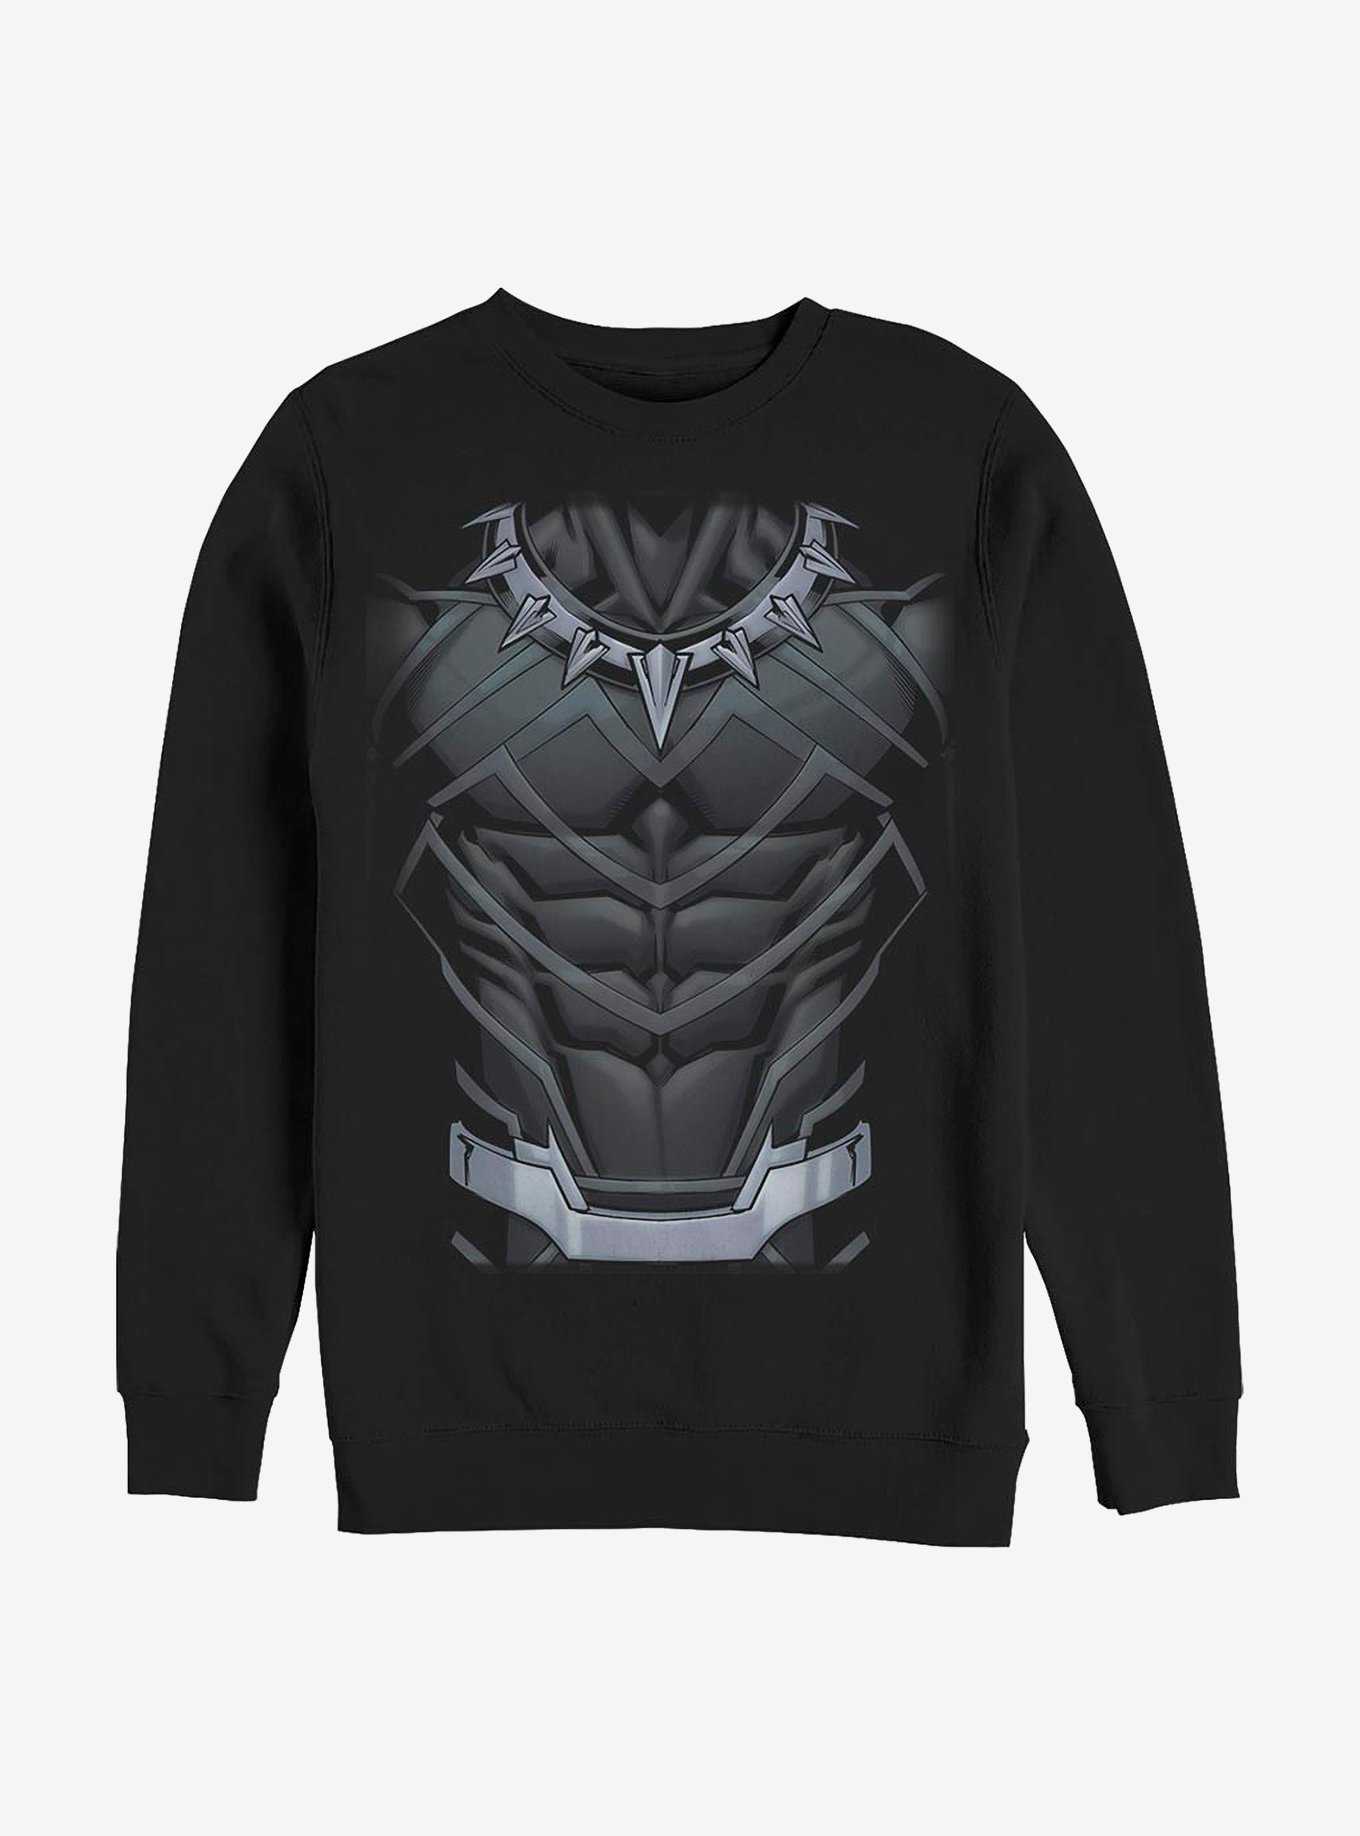 Marvel Black Panther Suit Sweatshirt, , hi-res